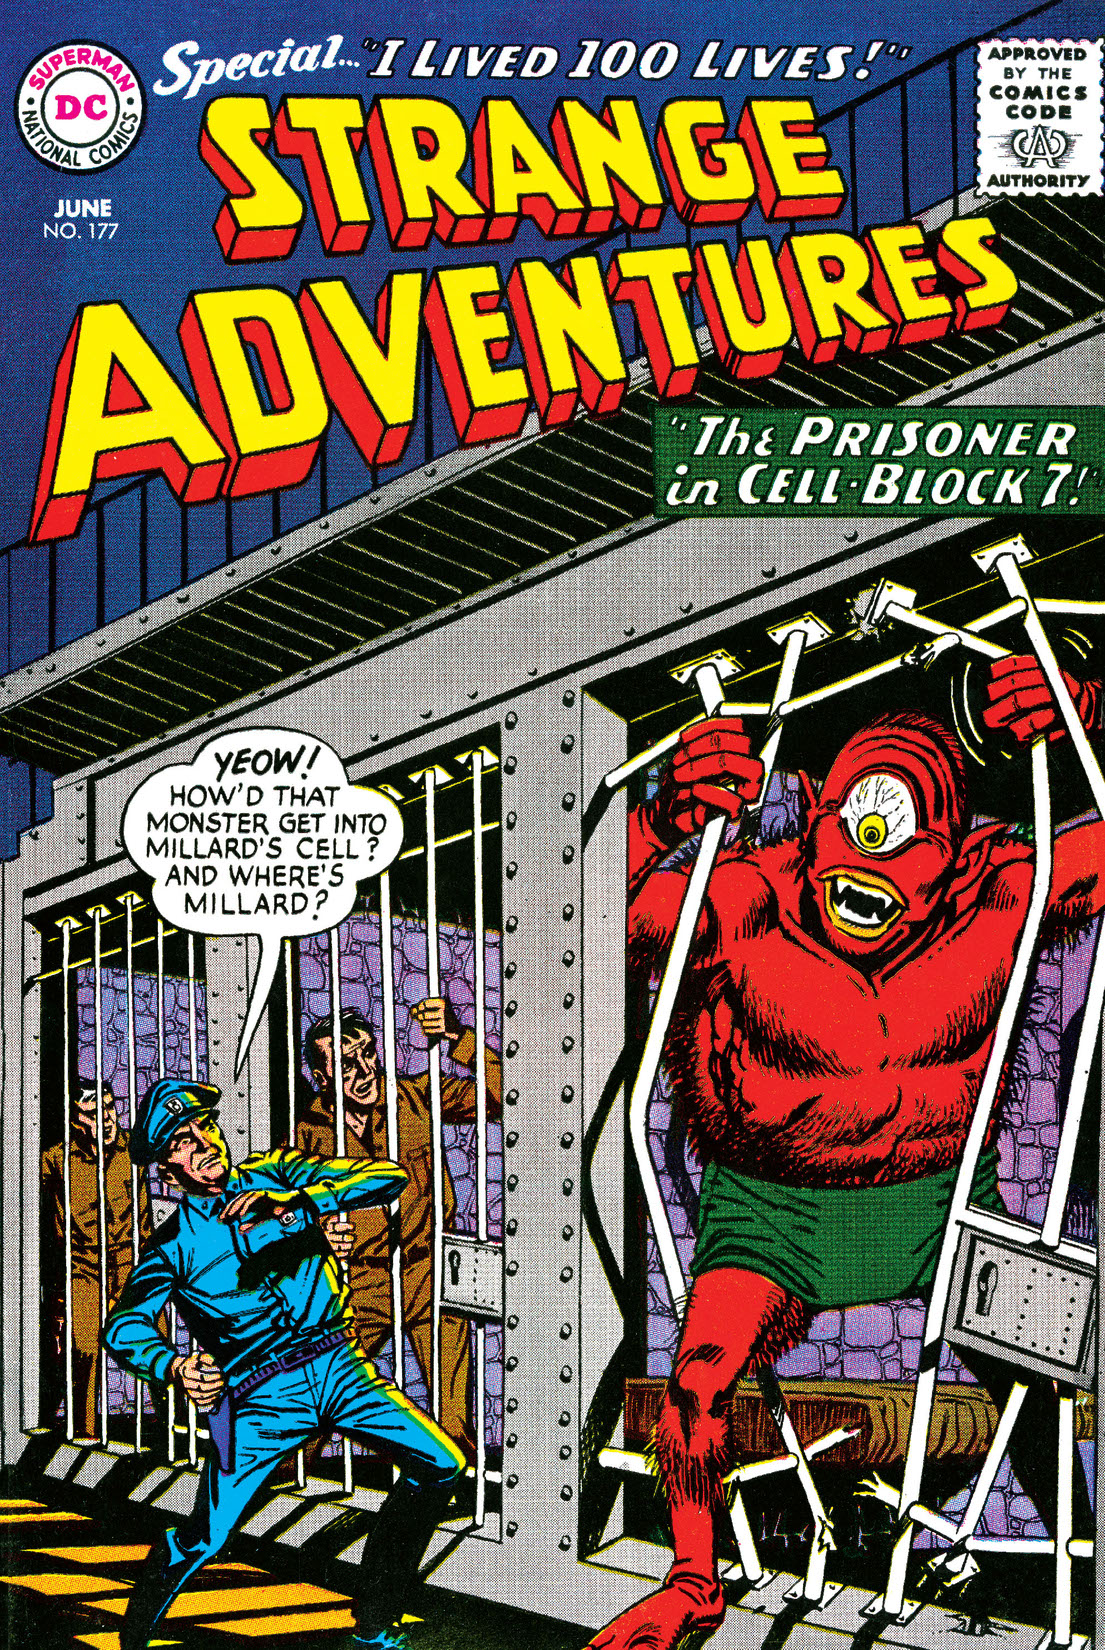 Strange Adventures (1950-) #177 preview images